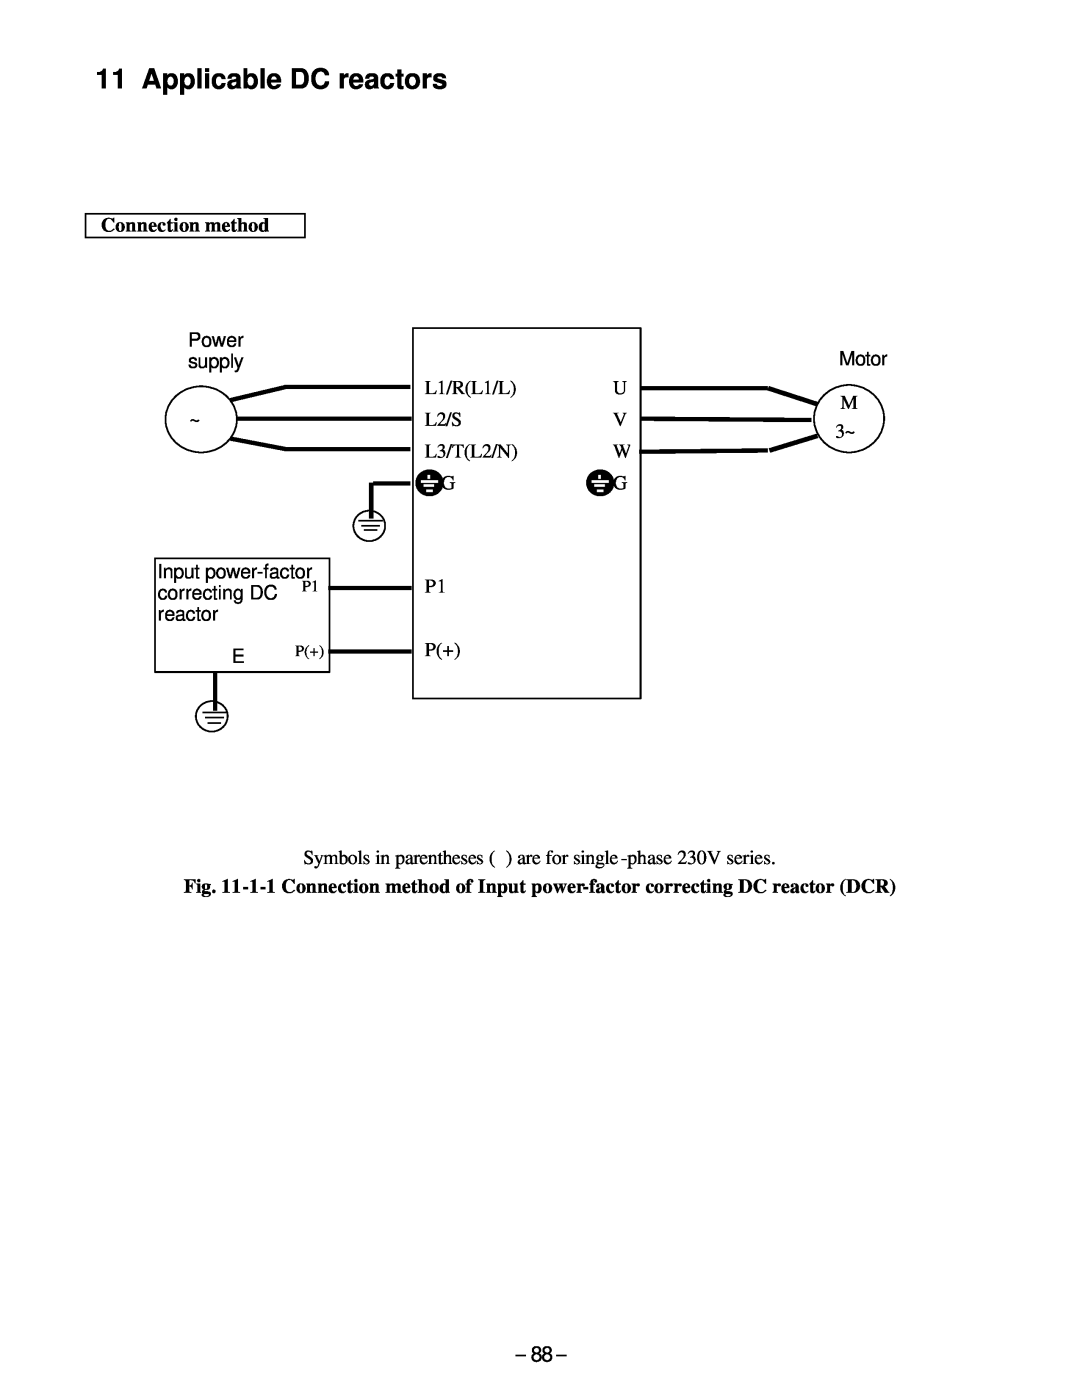 GE AF-300, C11 manual Applicable DC reactors, Connection method 